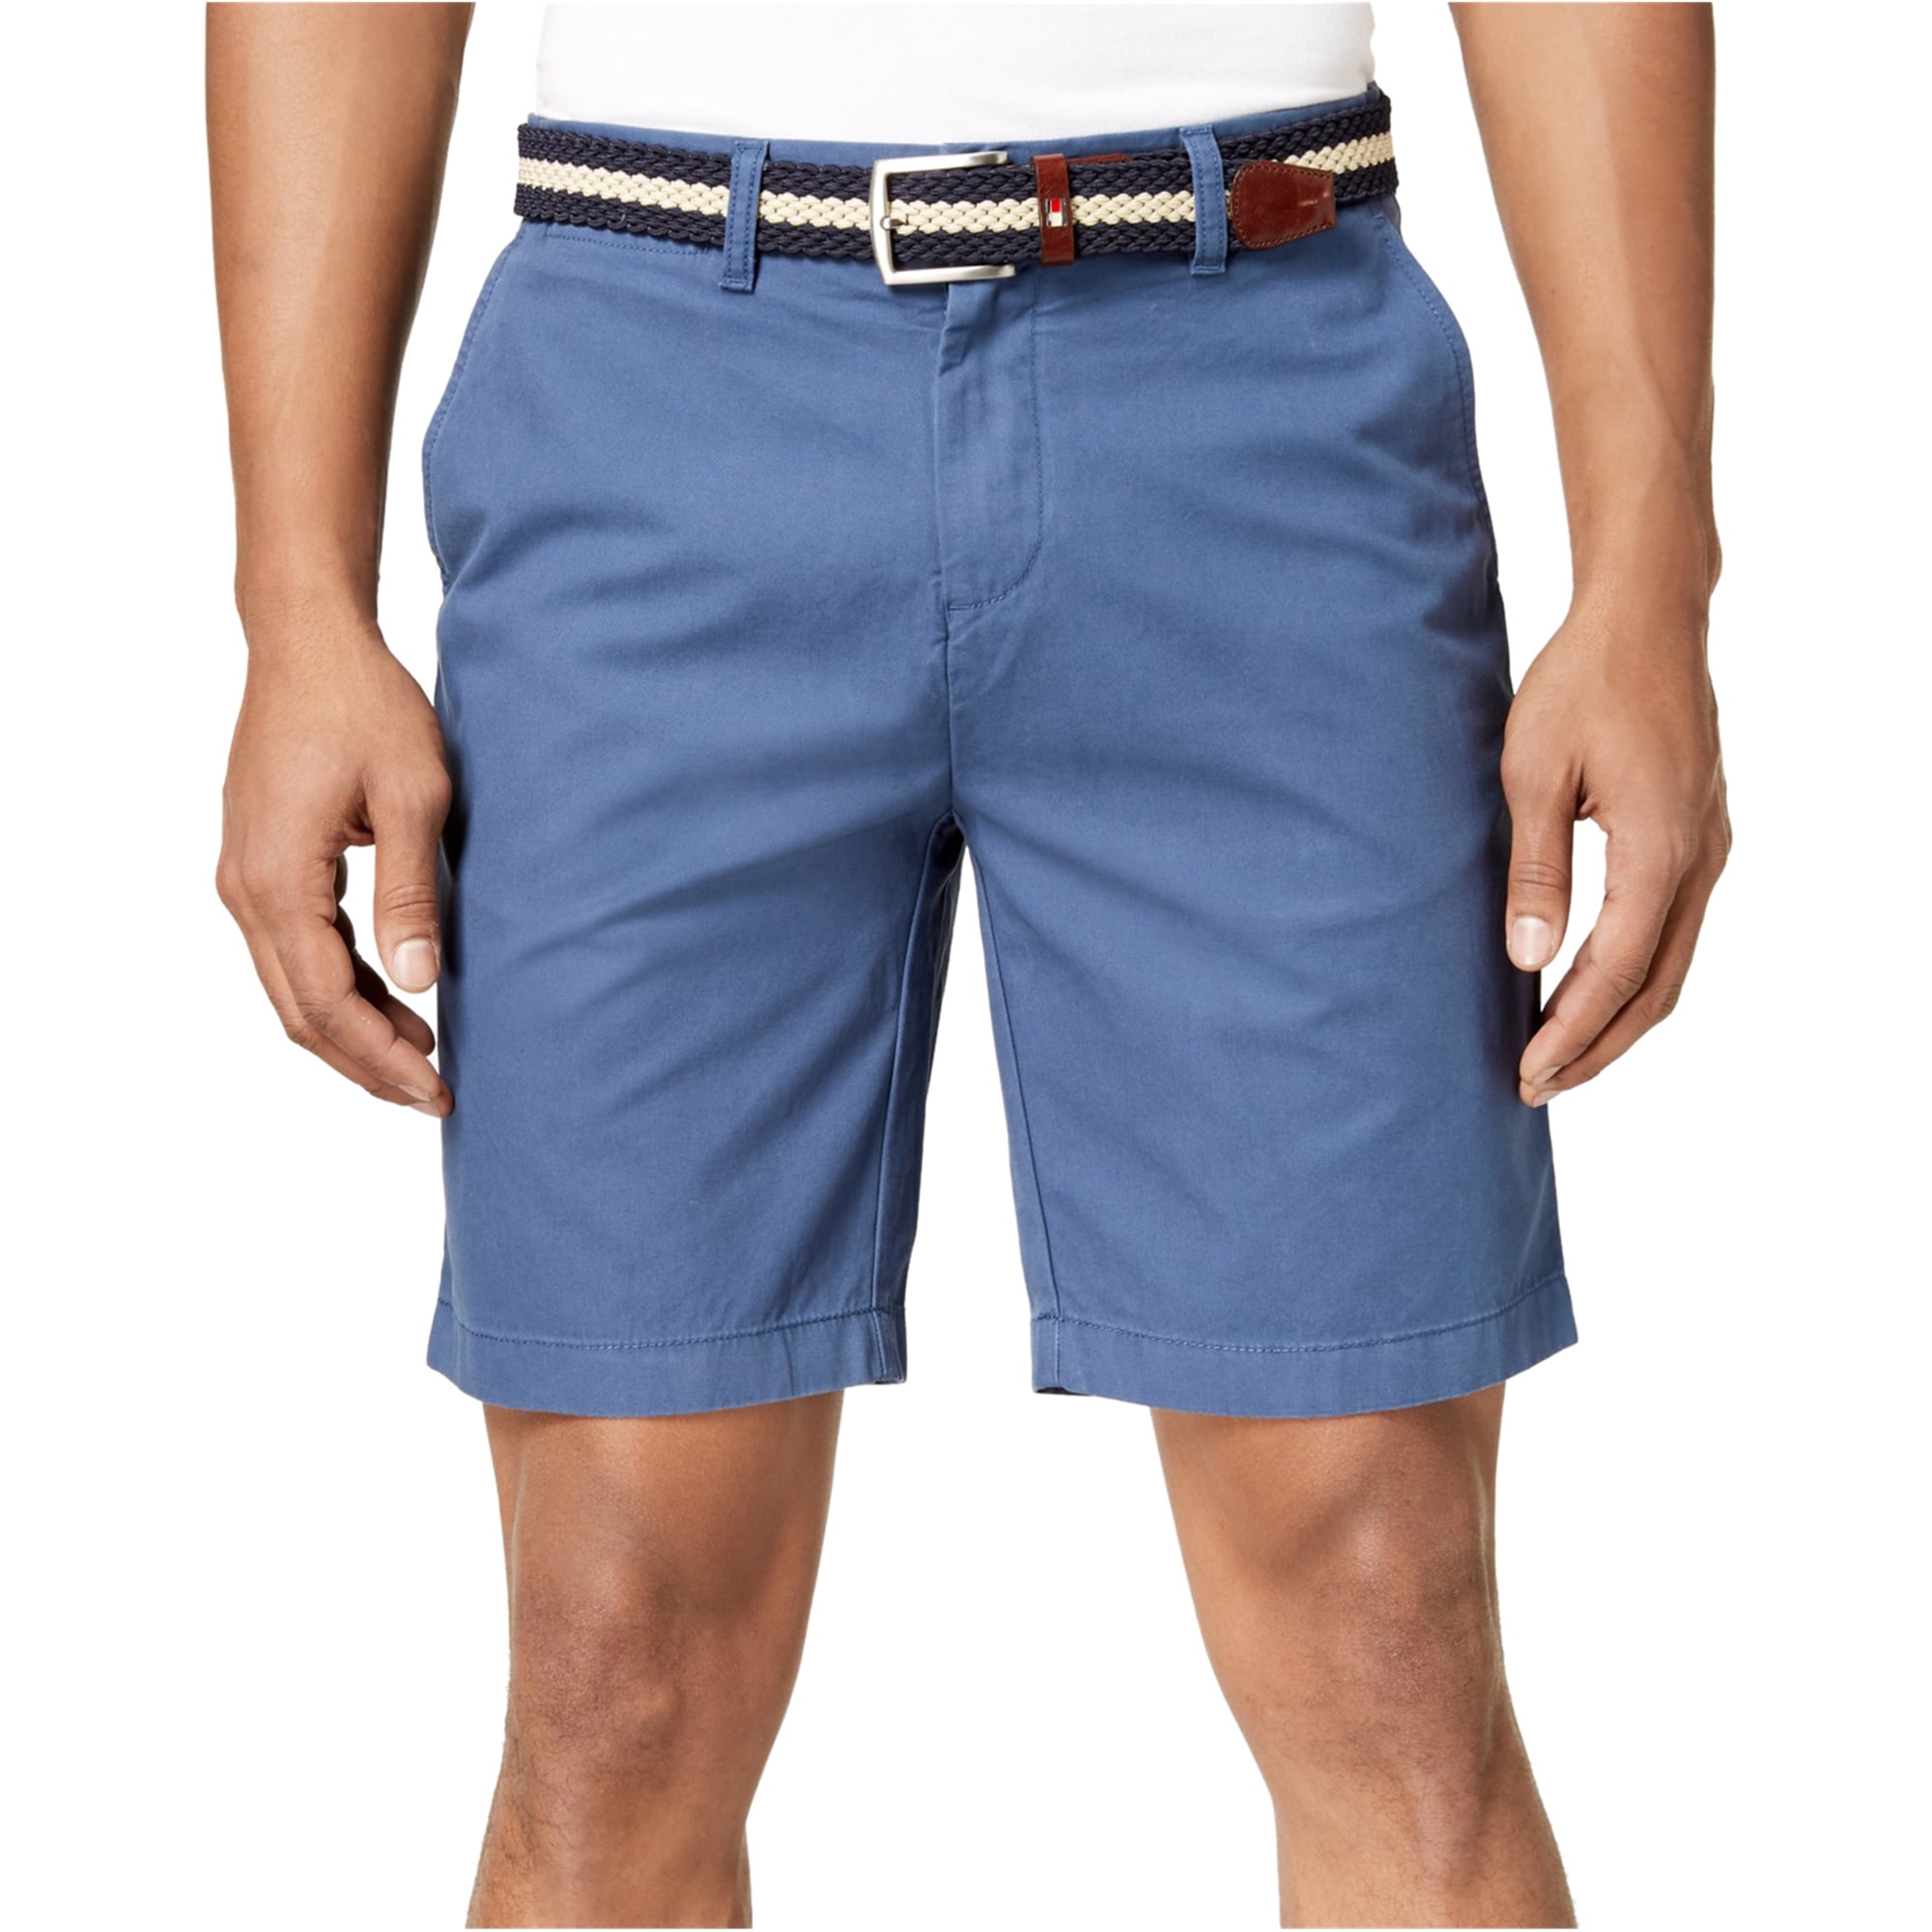 Tommy Hilfiger Flex Casual Chino Shorts Tropical Size 38W 7/" Inseam NWT